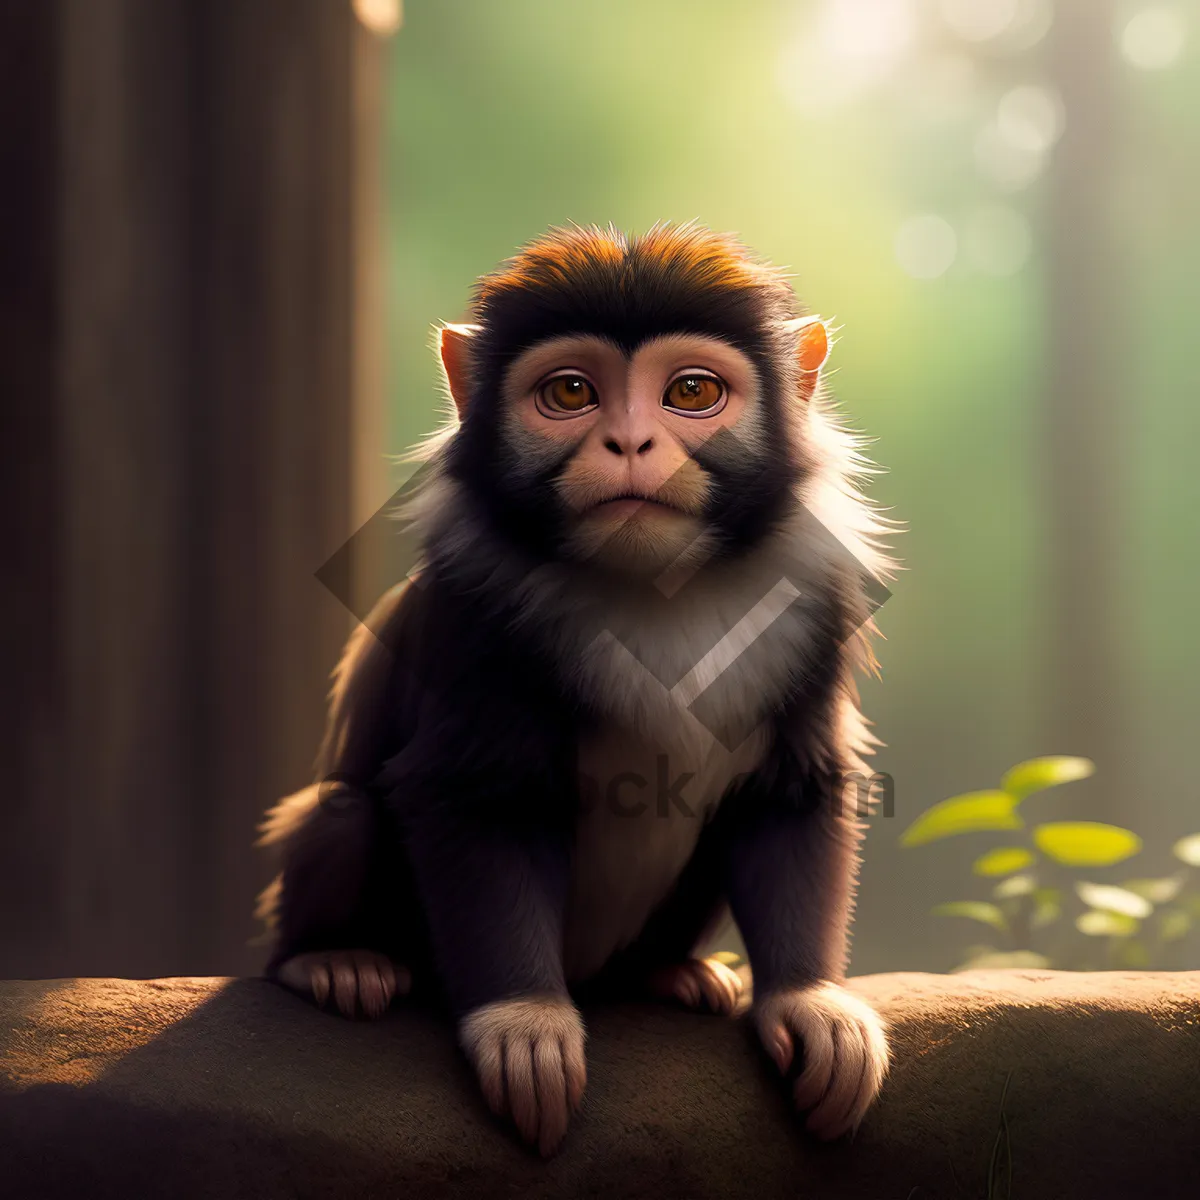 Picture of Wild Macaque Monkey in Primate Jungle Habitat